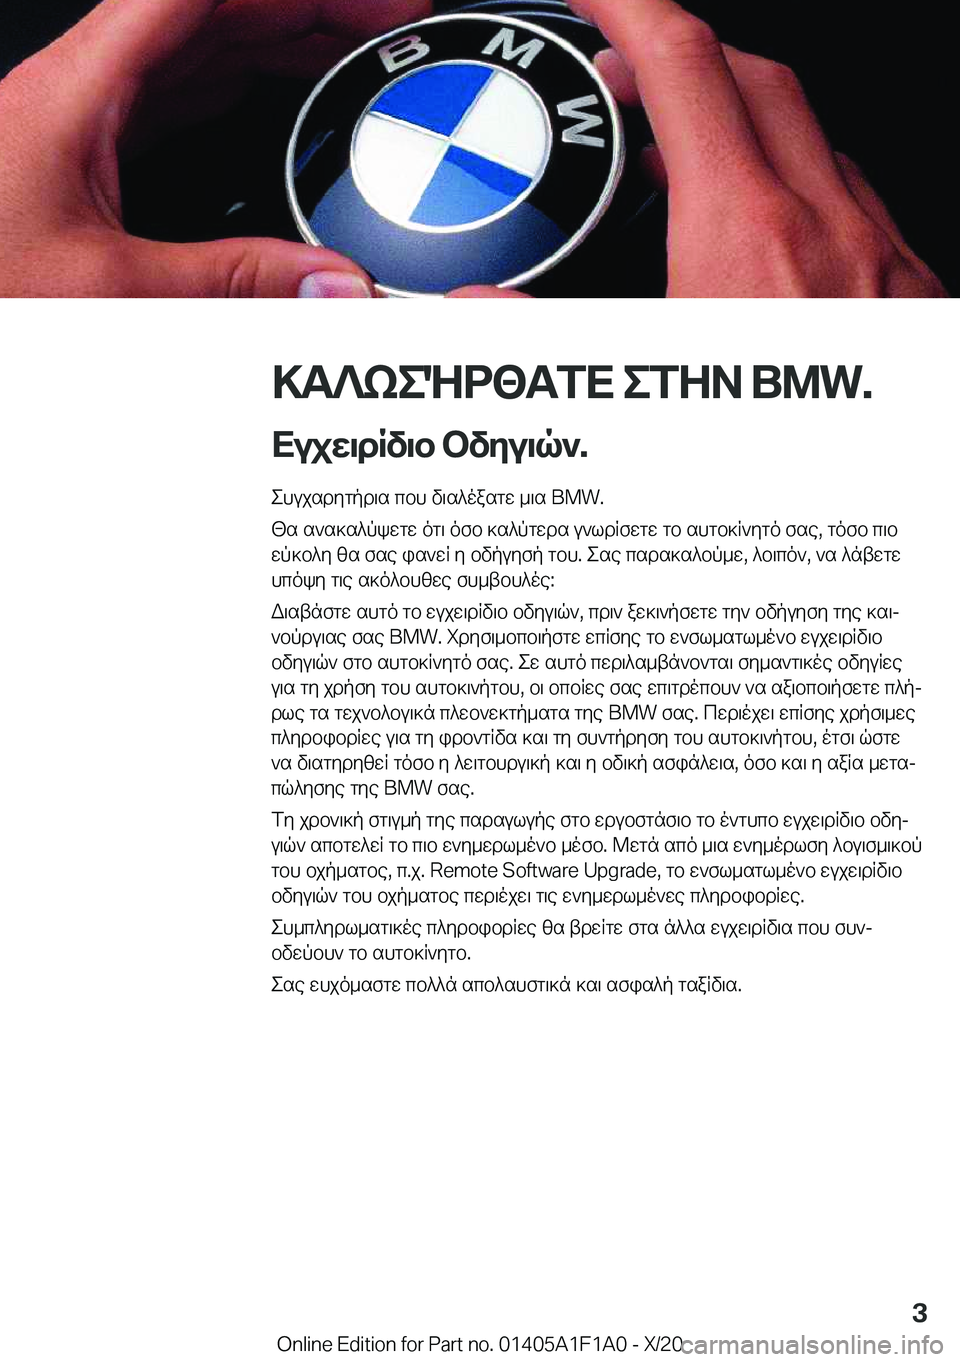 BMW M5 2021  ΟΔΗΓΌΣ ΧΡΉΣΗΣ (in Greek) >T?keNd<TfX�efZA��B�M�W�.
Xujw\dRv\b�bvyu\q`�. ehujsdygpd\s�cbh�v\s^oasgw�_\s��B�M�W�.
[s�s`s]s^pkwgw�og\�ofb�